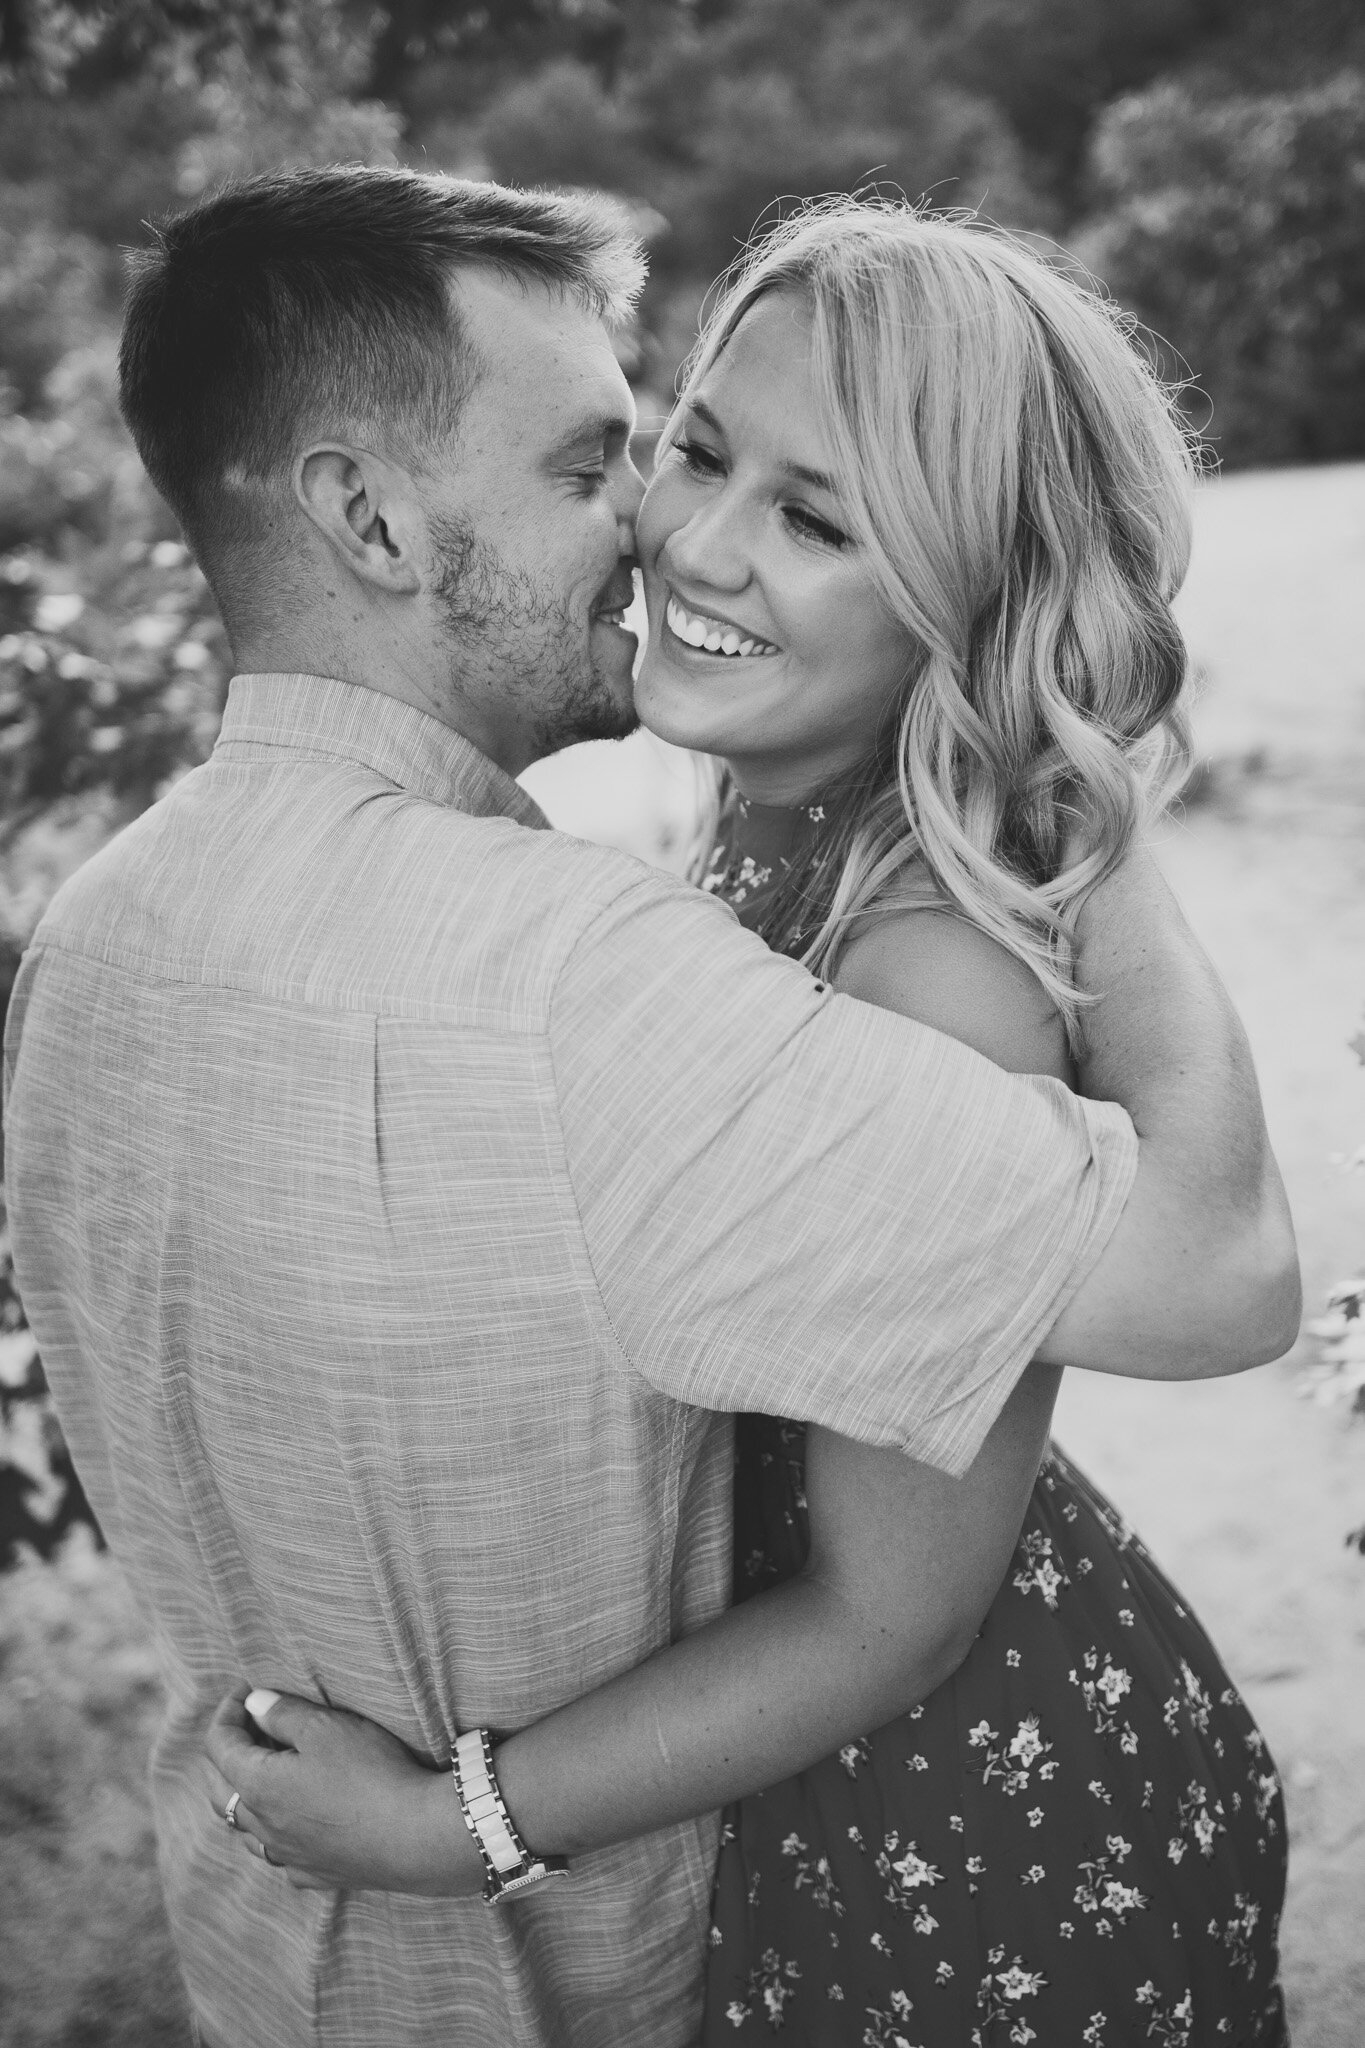 Chris and Kaleen Summer 2020 - Provin Trails - Grand Rapids Wedding Photographer - West Michigan Wedding Photographer - J Darling Photo 005.jpg